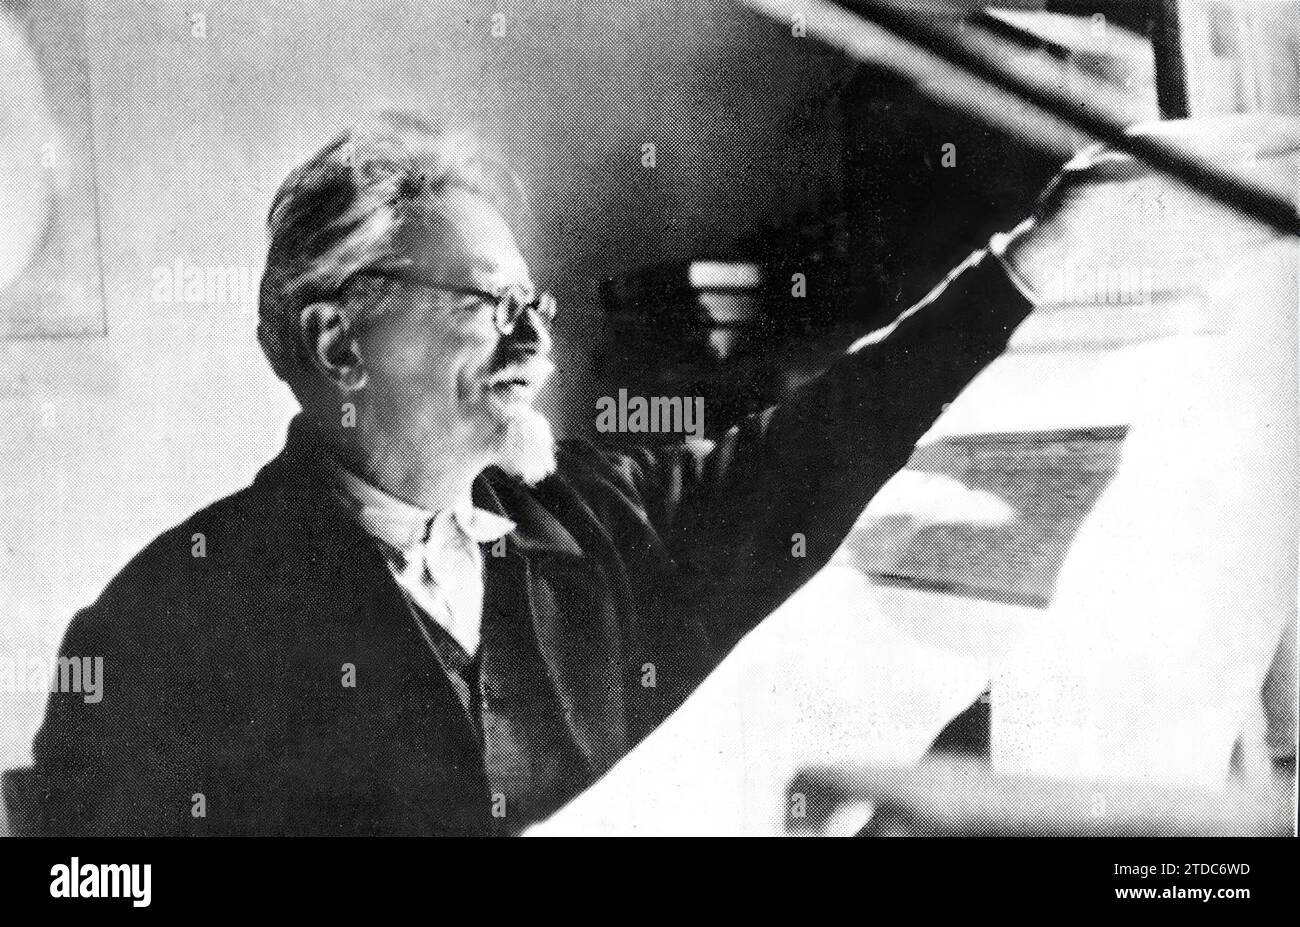 12/31/1929. Leon Trotsky (1879-1940) working in his studio. Credit: Album / Archivo ABC Stock Photo